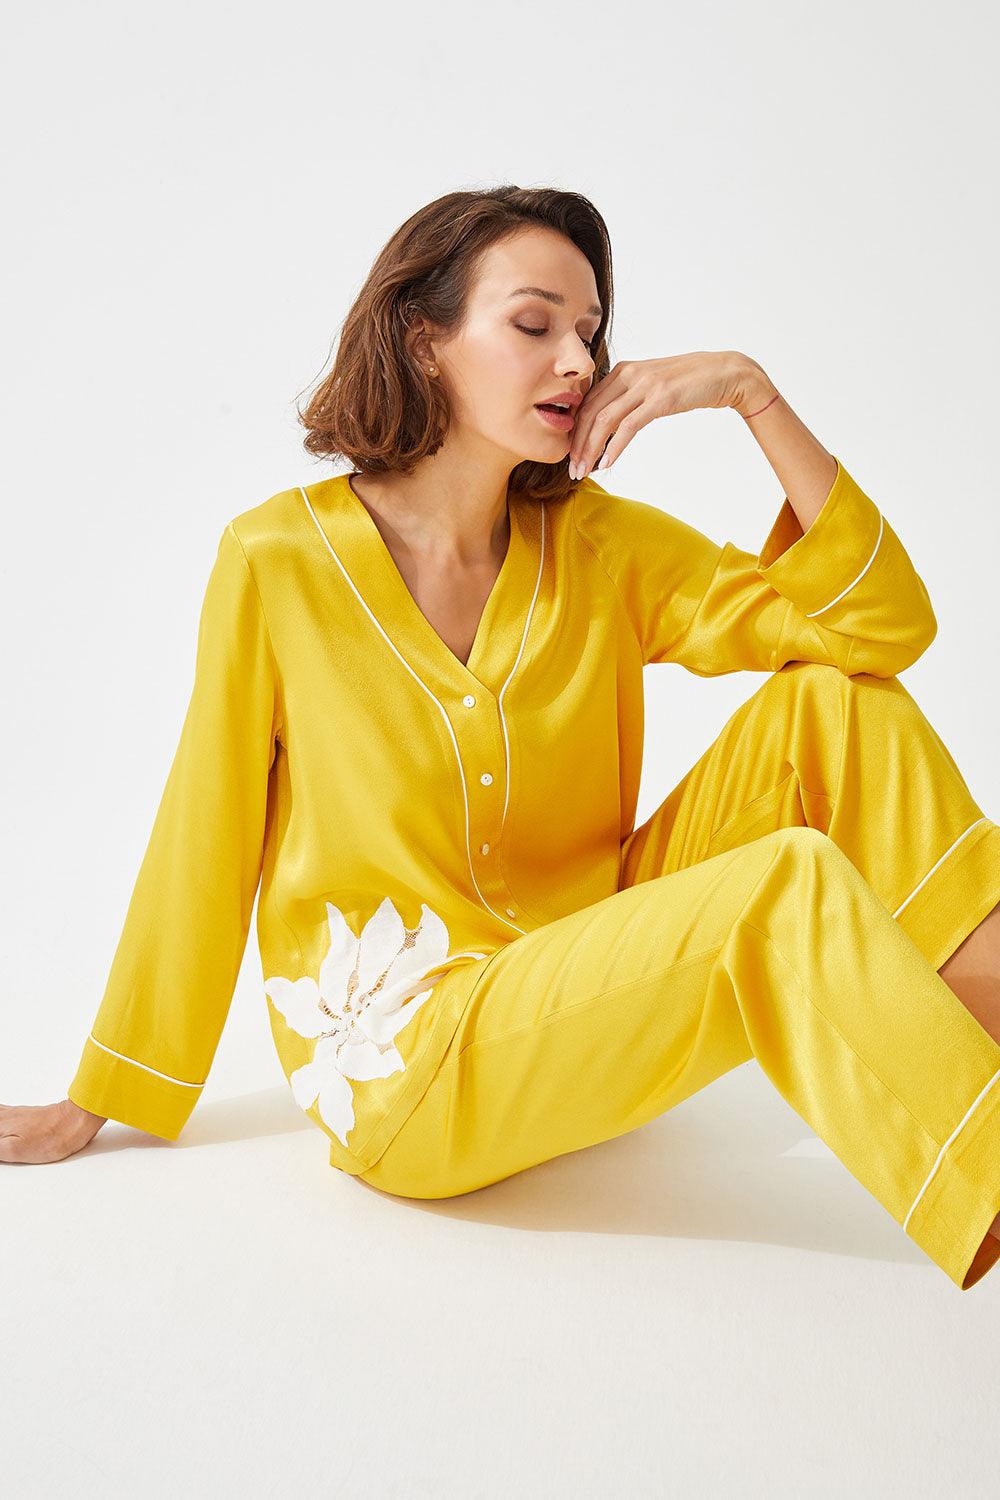 Women Satin Silk Look Sleepwear Pyjamas Long Sleeve Nightwear Set